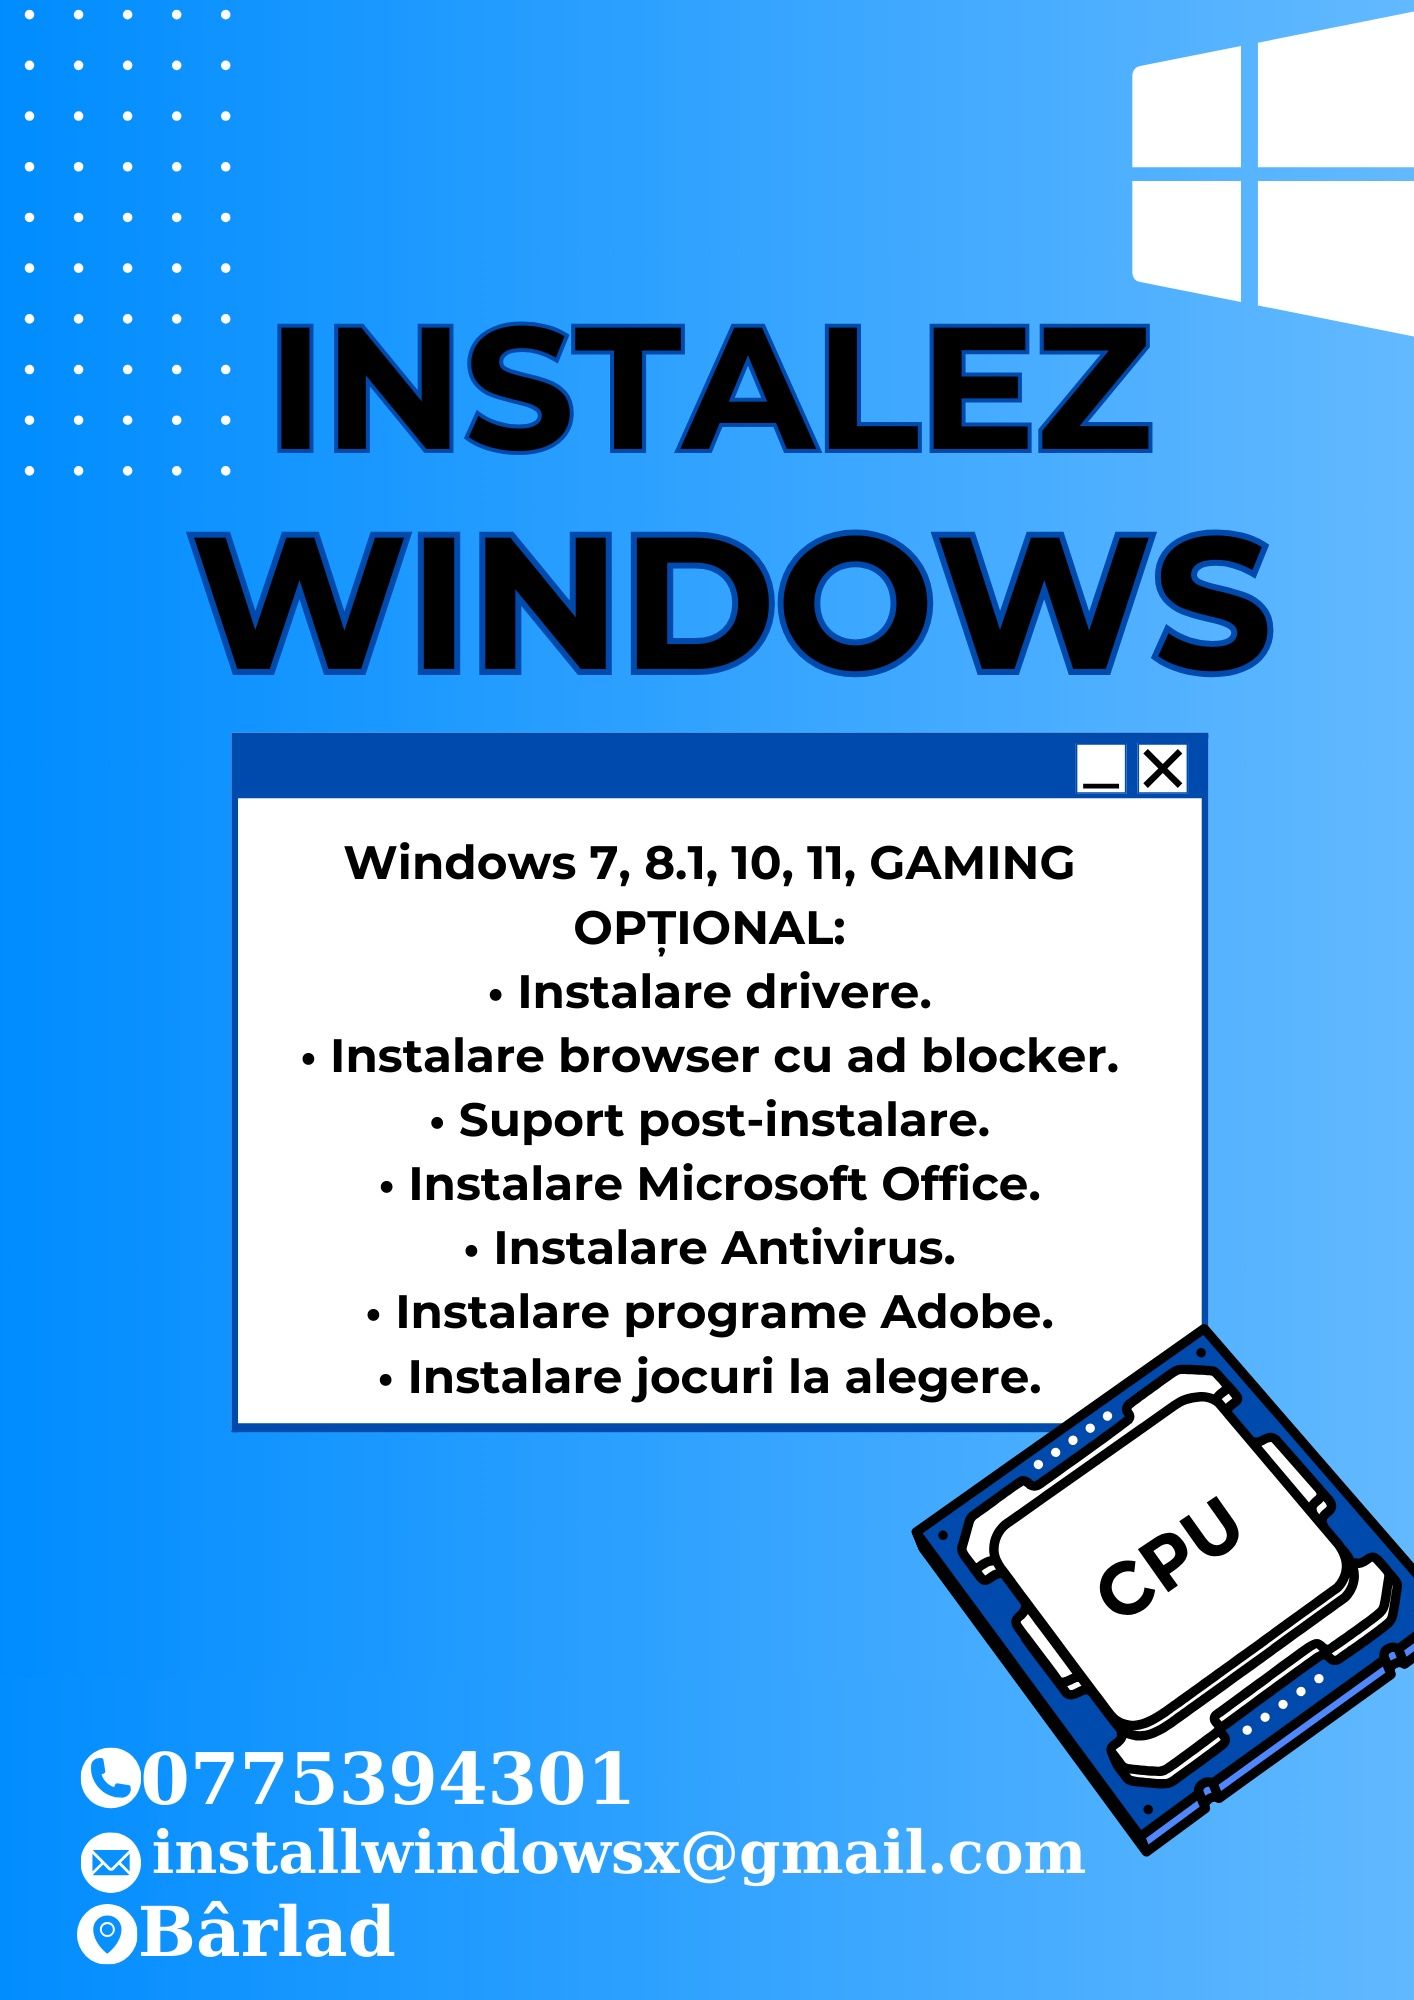 Instalez windows barlad | Mentenanță PC